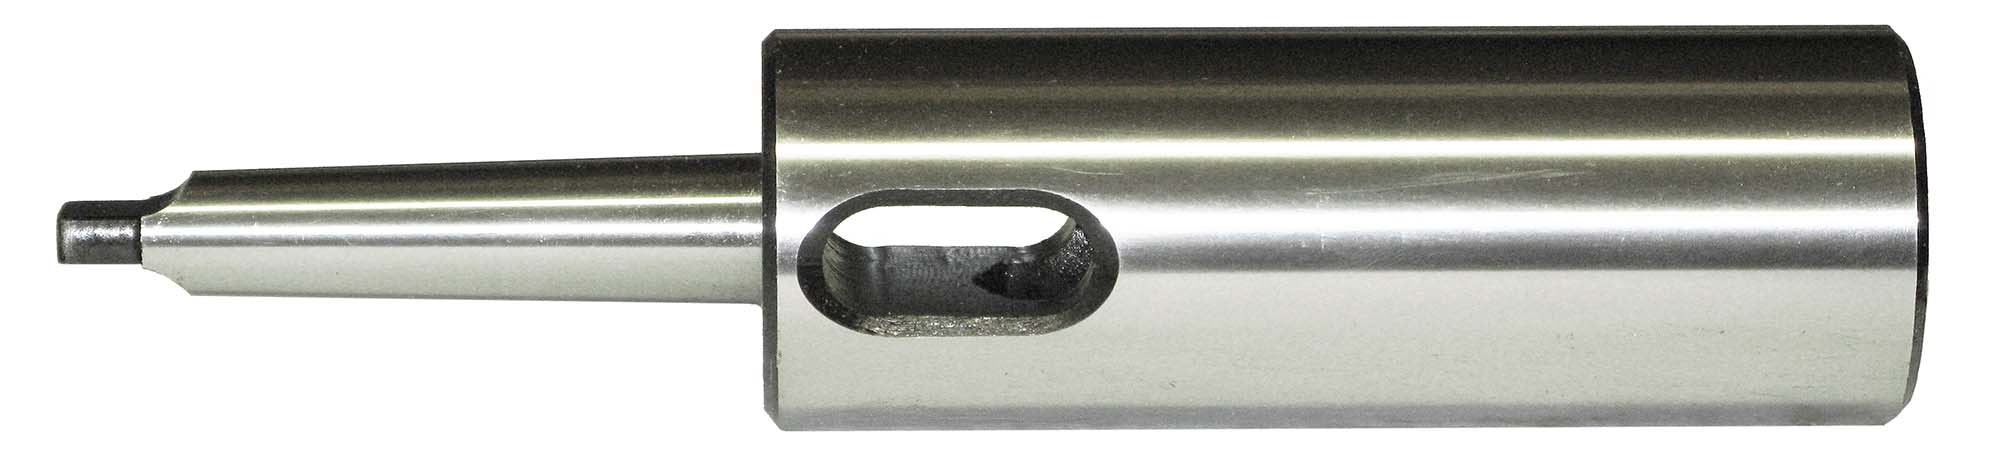 3 Morse Taper(hole)-2 Morse Taper(shank) Extension Socket, SL3-2